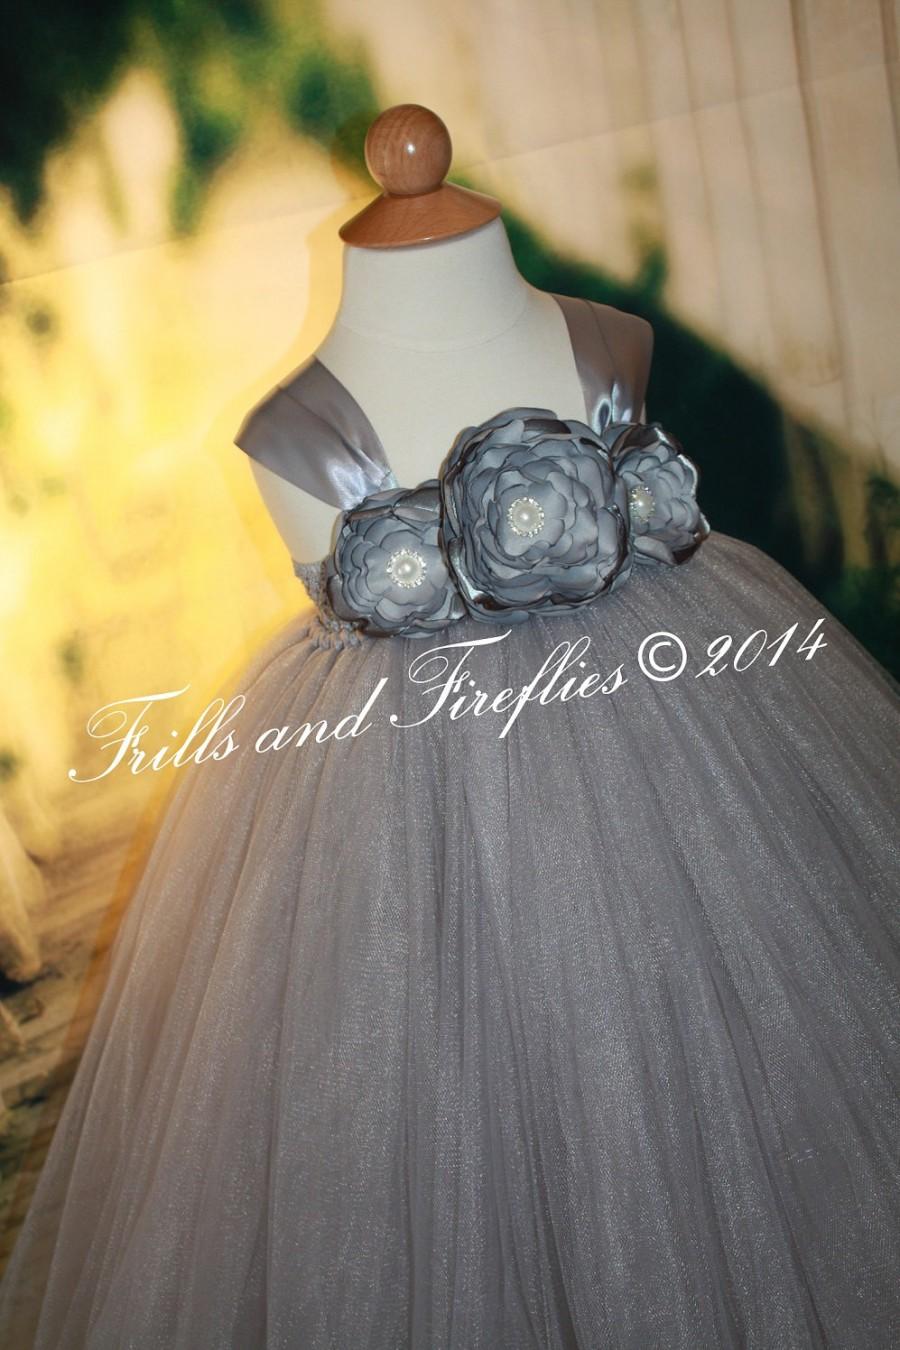 زفاف - Silver Gray/grey Flower girl Dress with Satin Flowers and Gray Satin Ribbon Shoulder Straps, Weddings, Birthdays 1t,2t,3t,4t,5t, 6, 8, 10